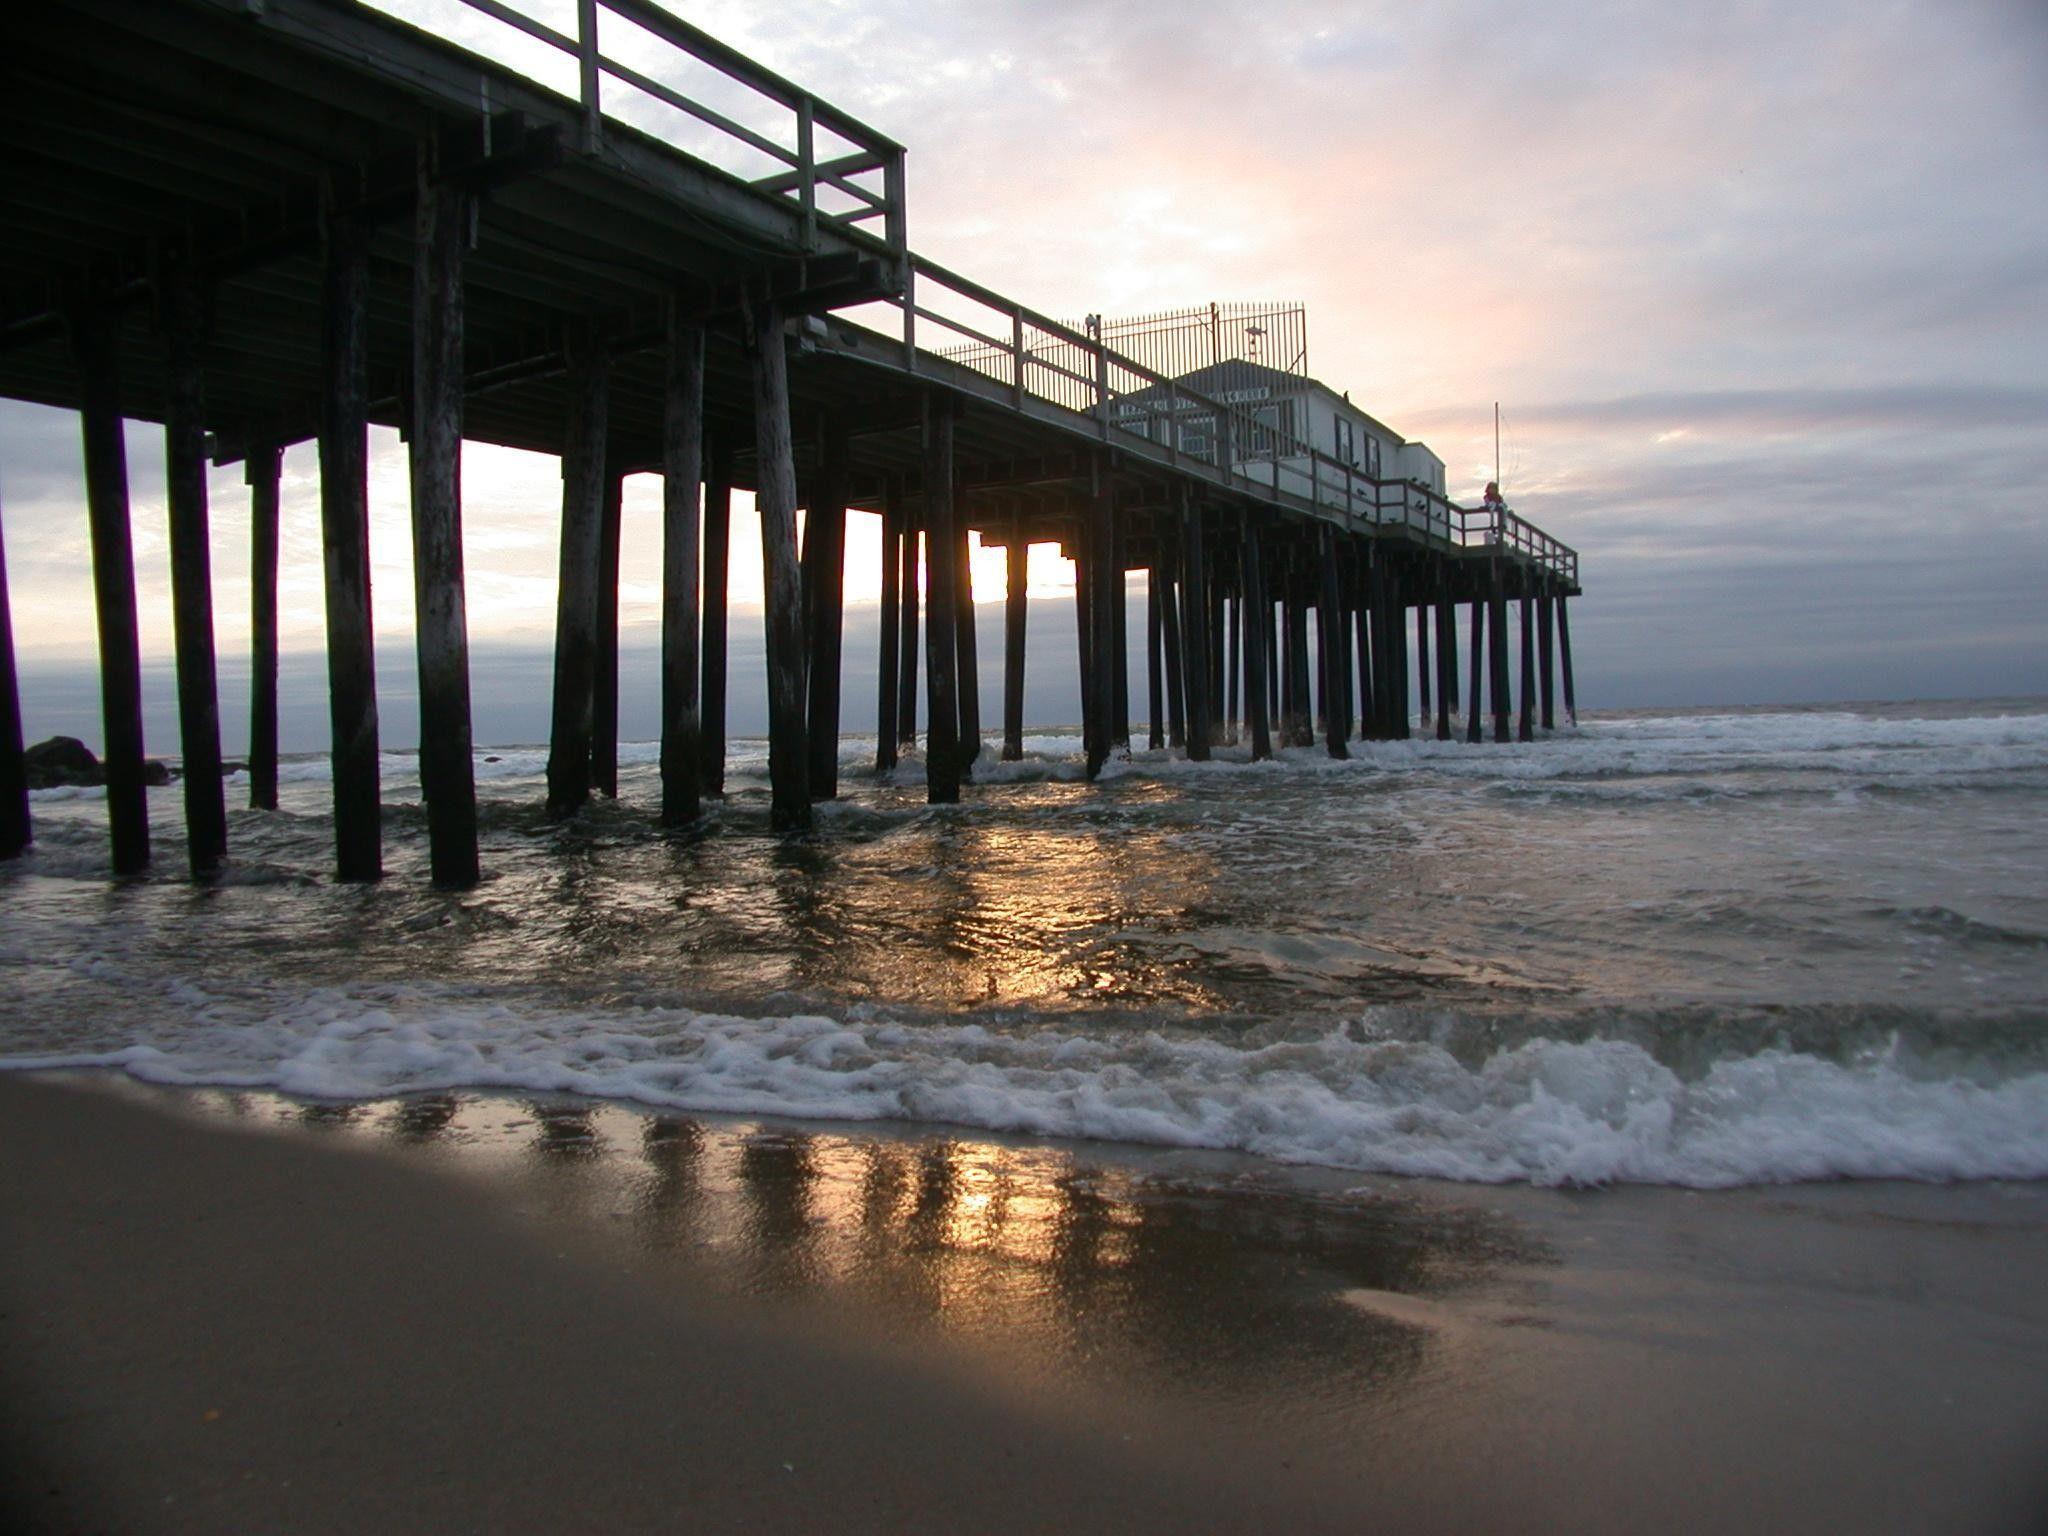 Beaches: Beach Boardwalk Sunset Pier Wallpaper In HD for HD 16:9